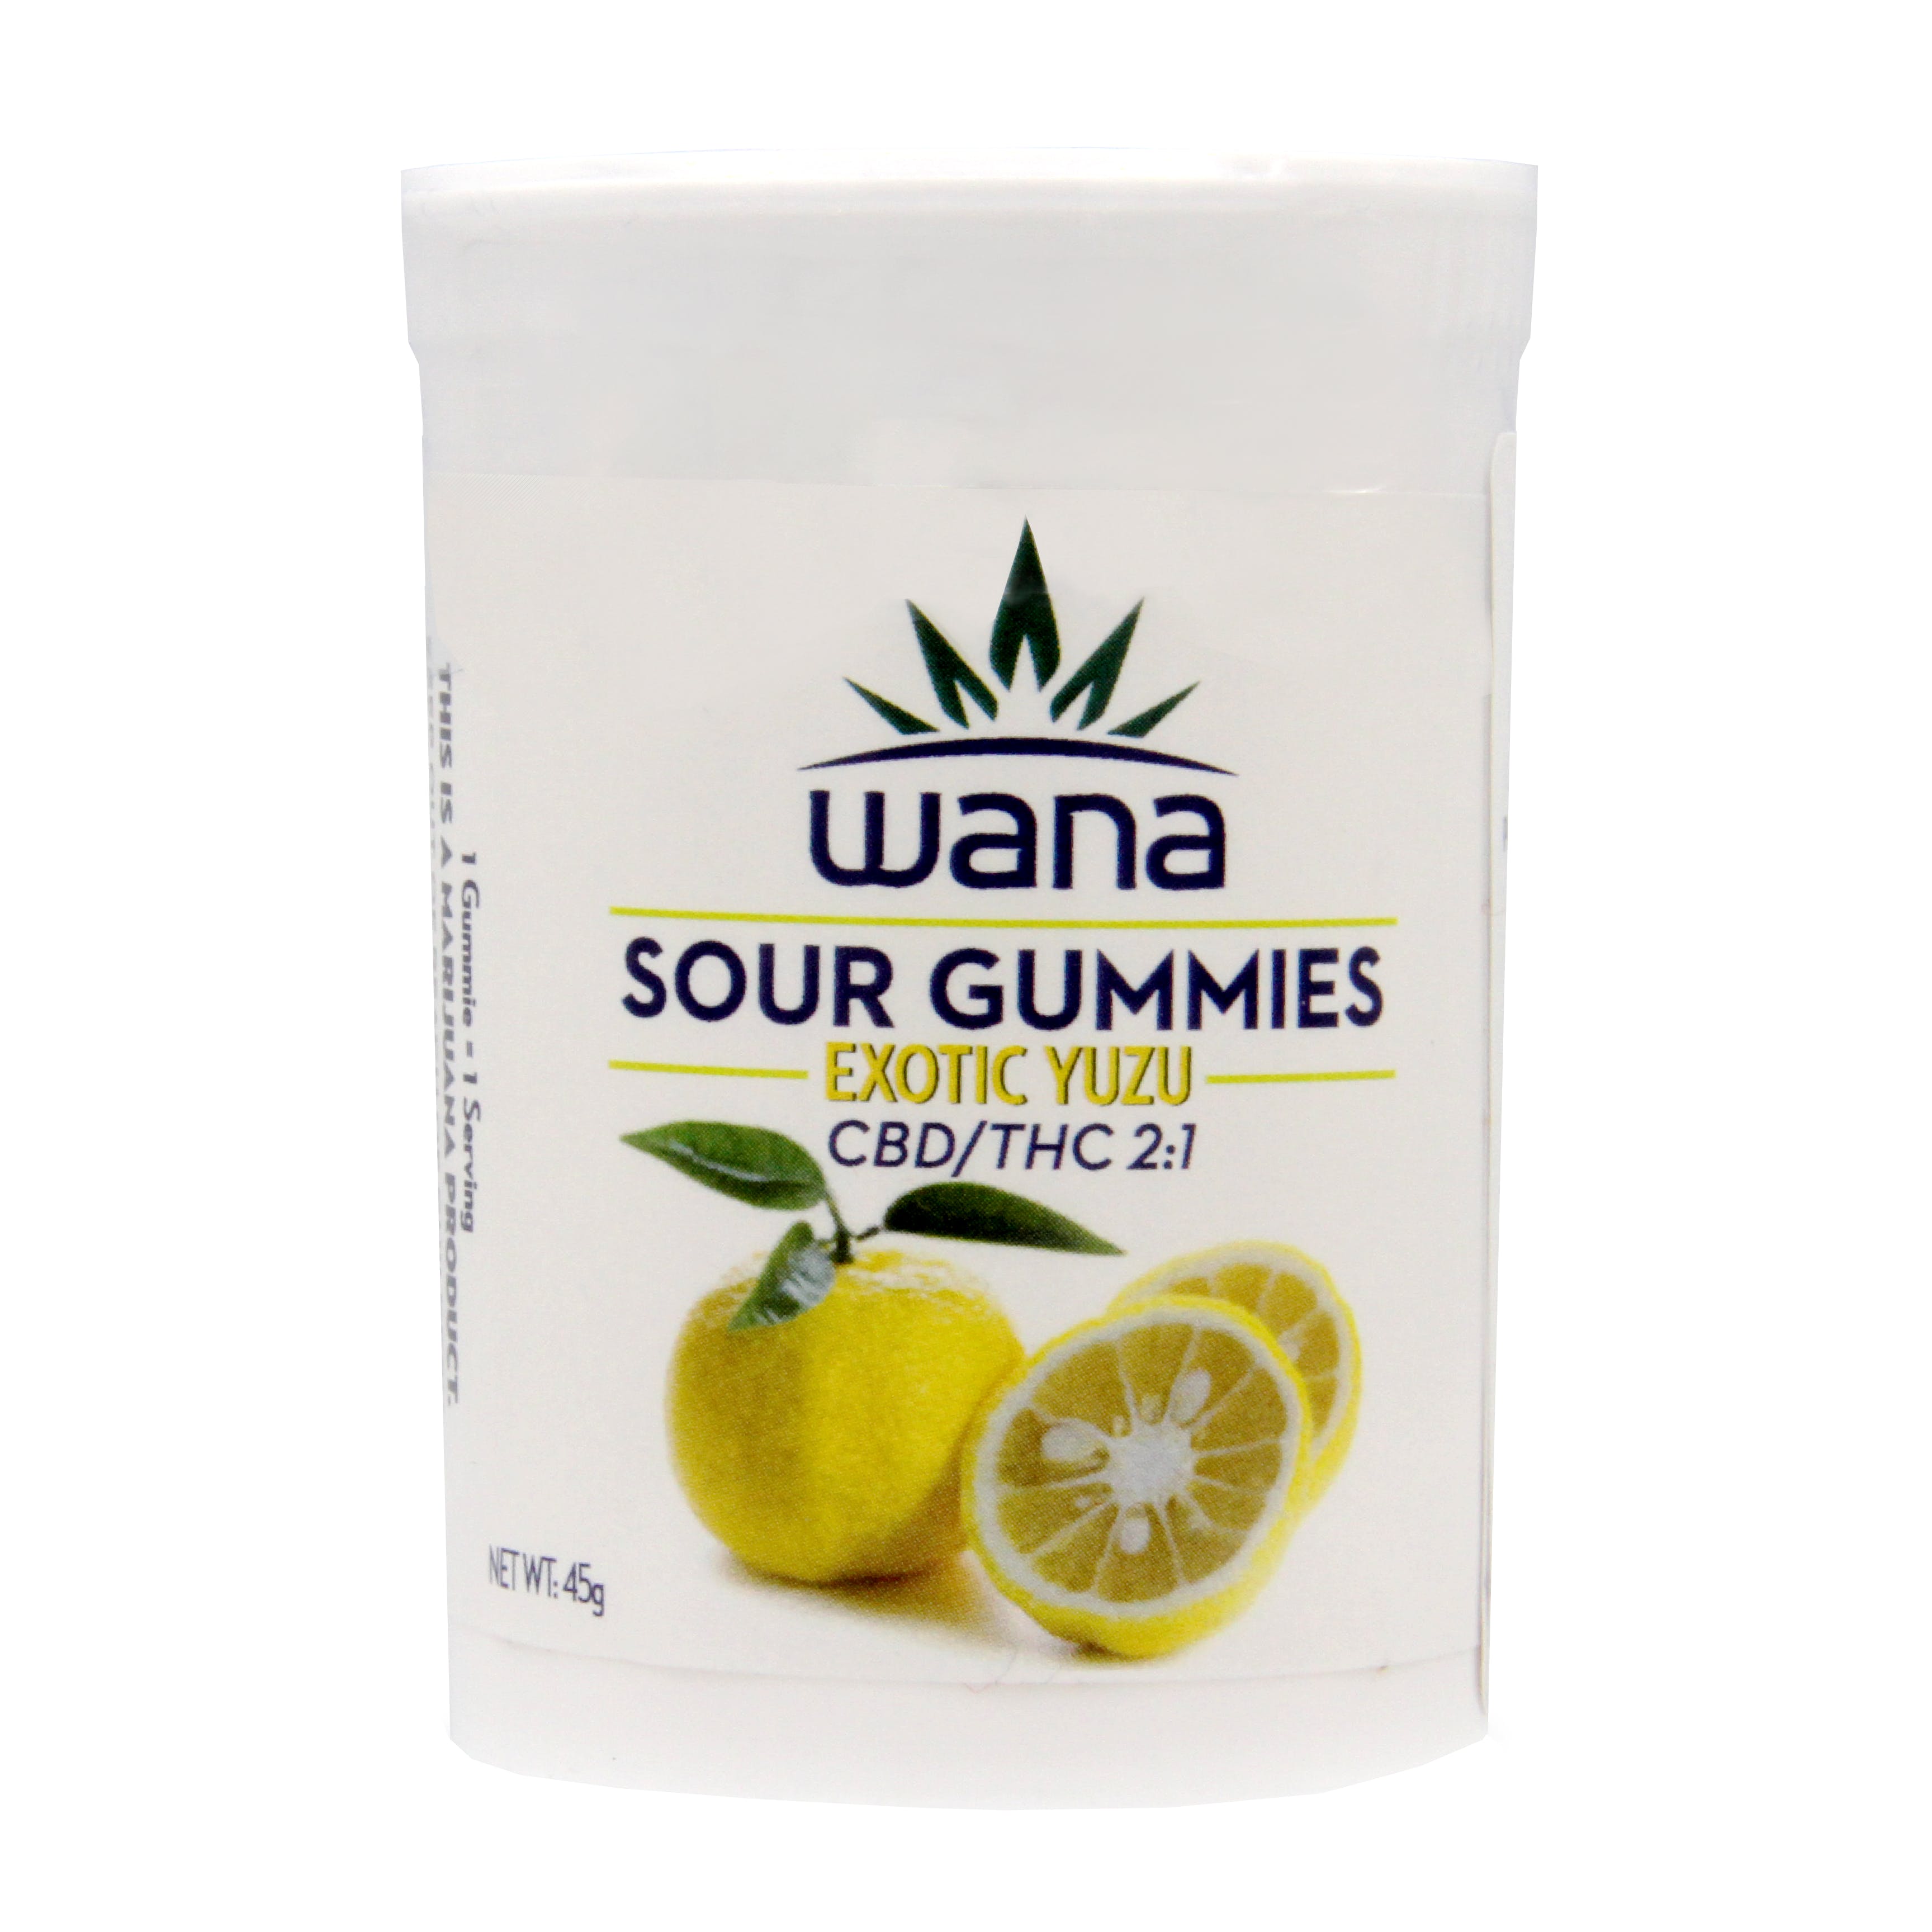 Wana - Sour Gummies - Exotic Yuzu - CBD/THC 2:1